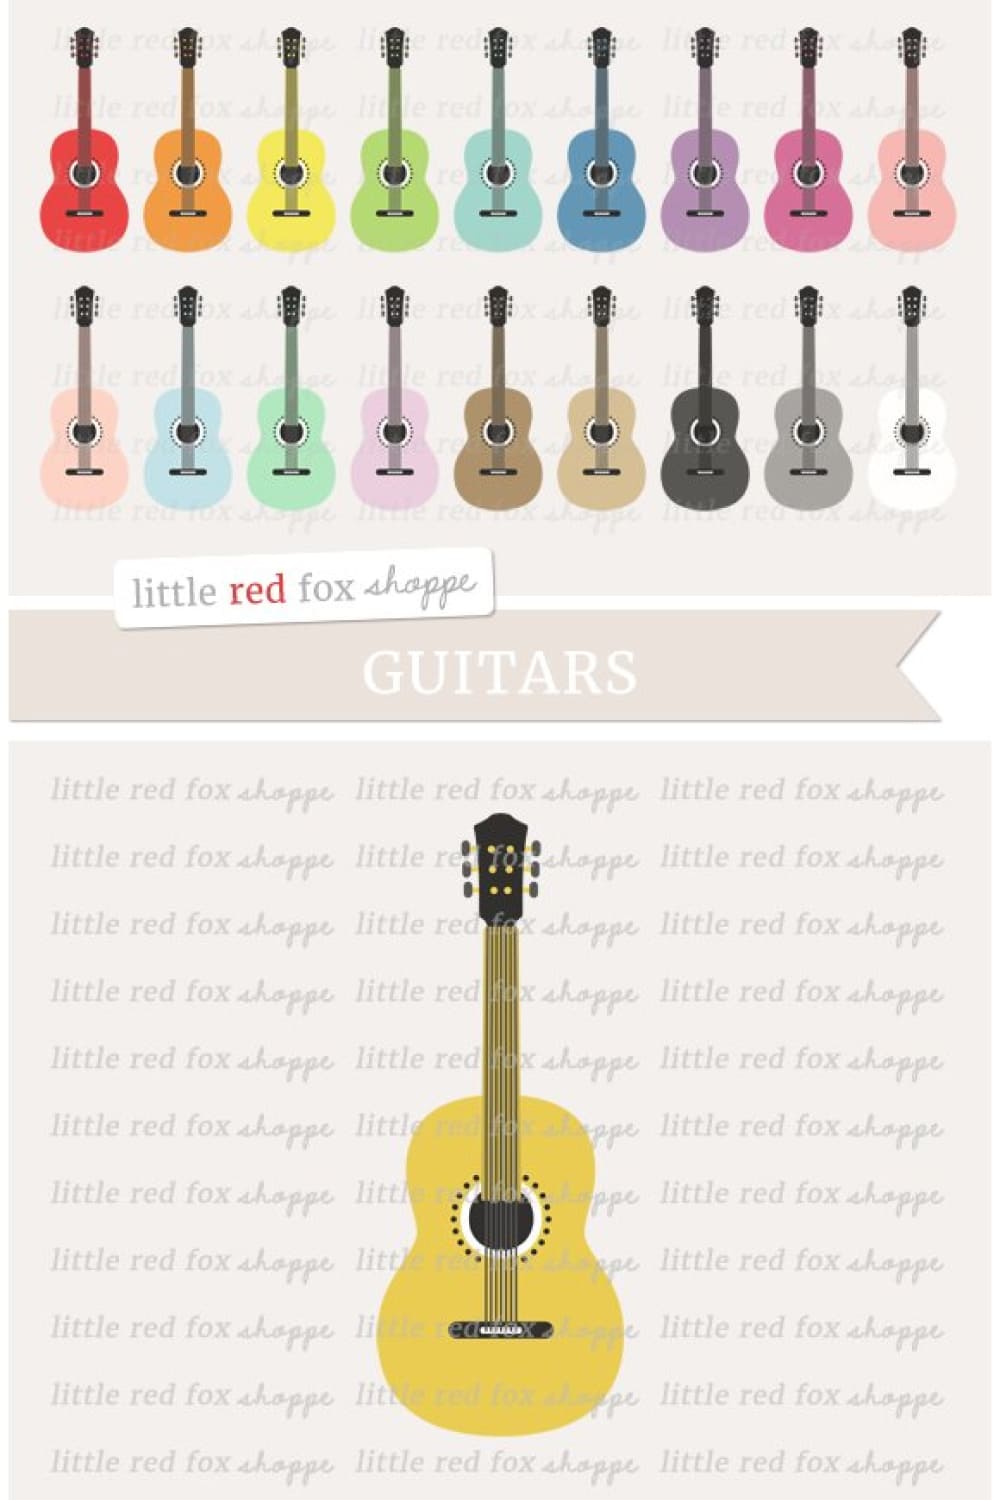 Bundle of unique images of multi-colored guitars.